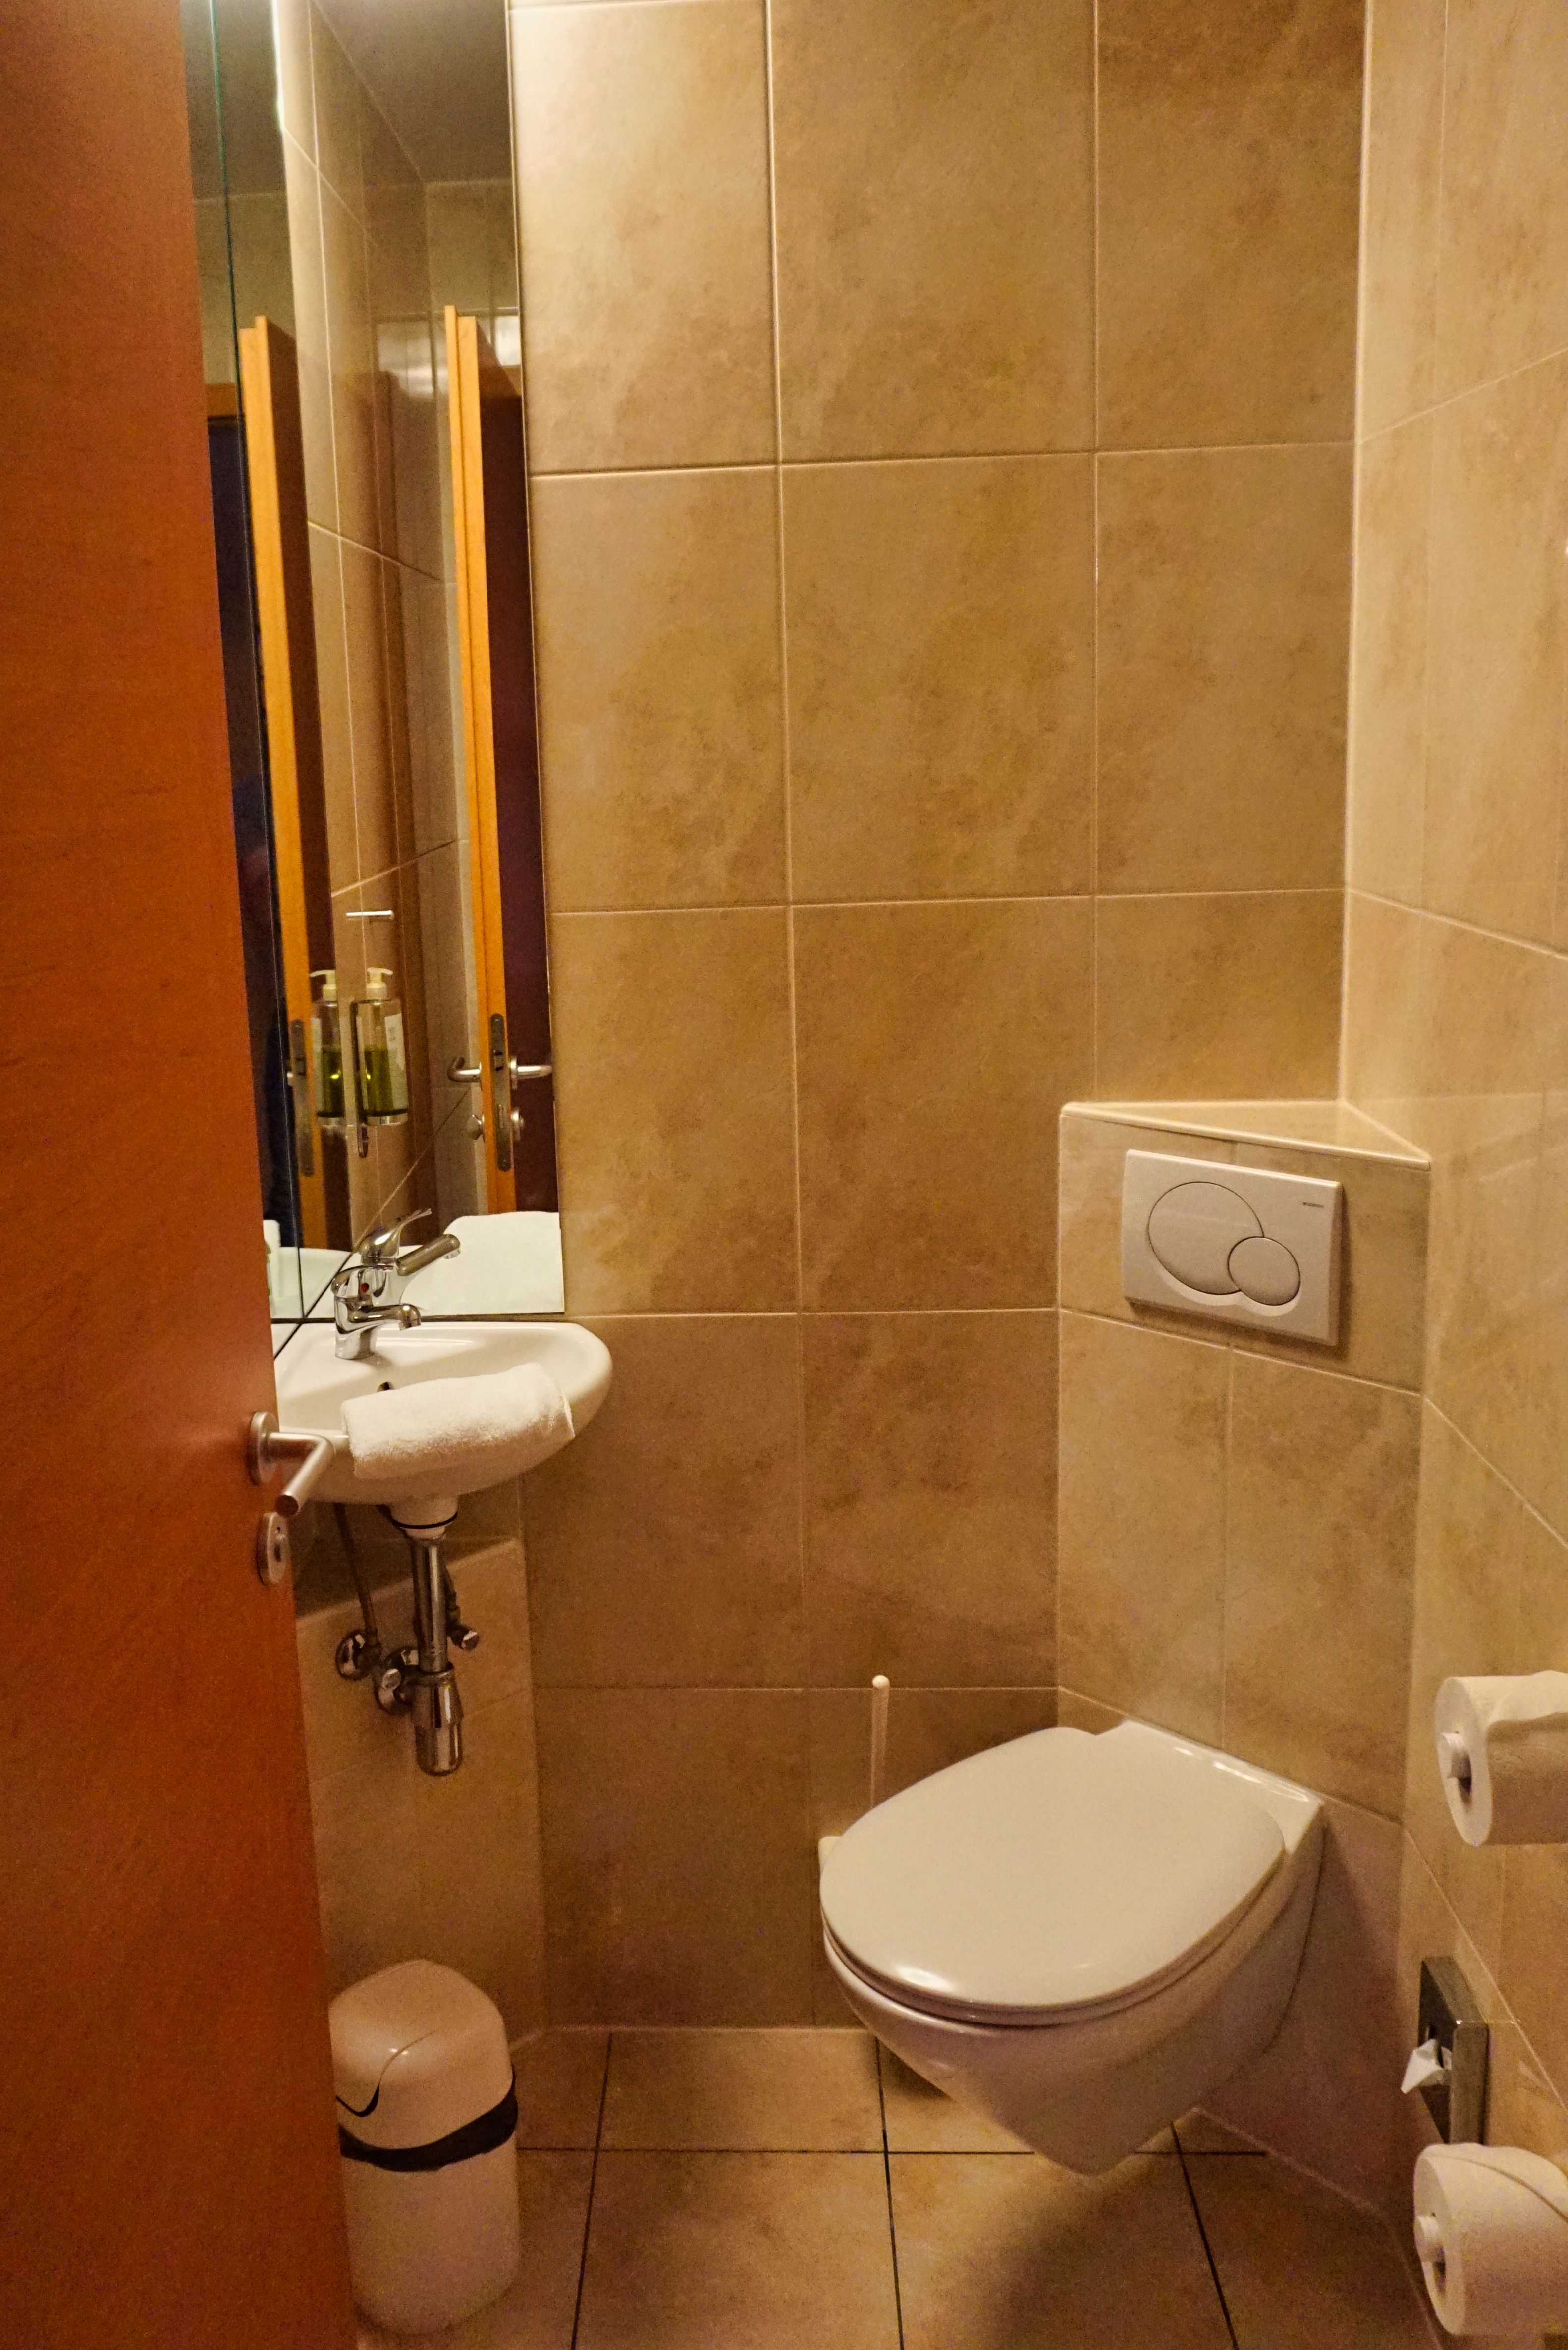 Separates WC im Hotel Upstalsboom Landhotel Friesland, Varel.
